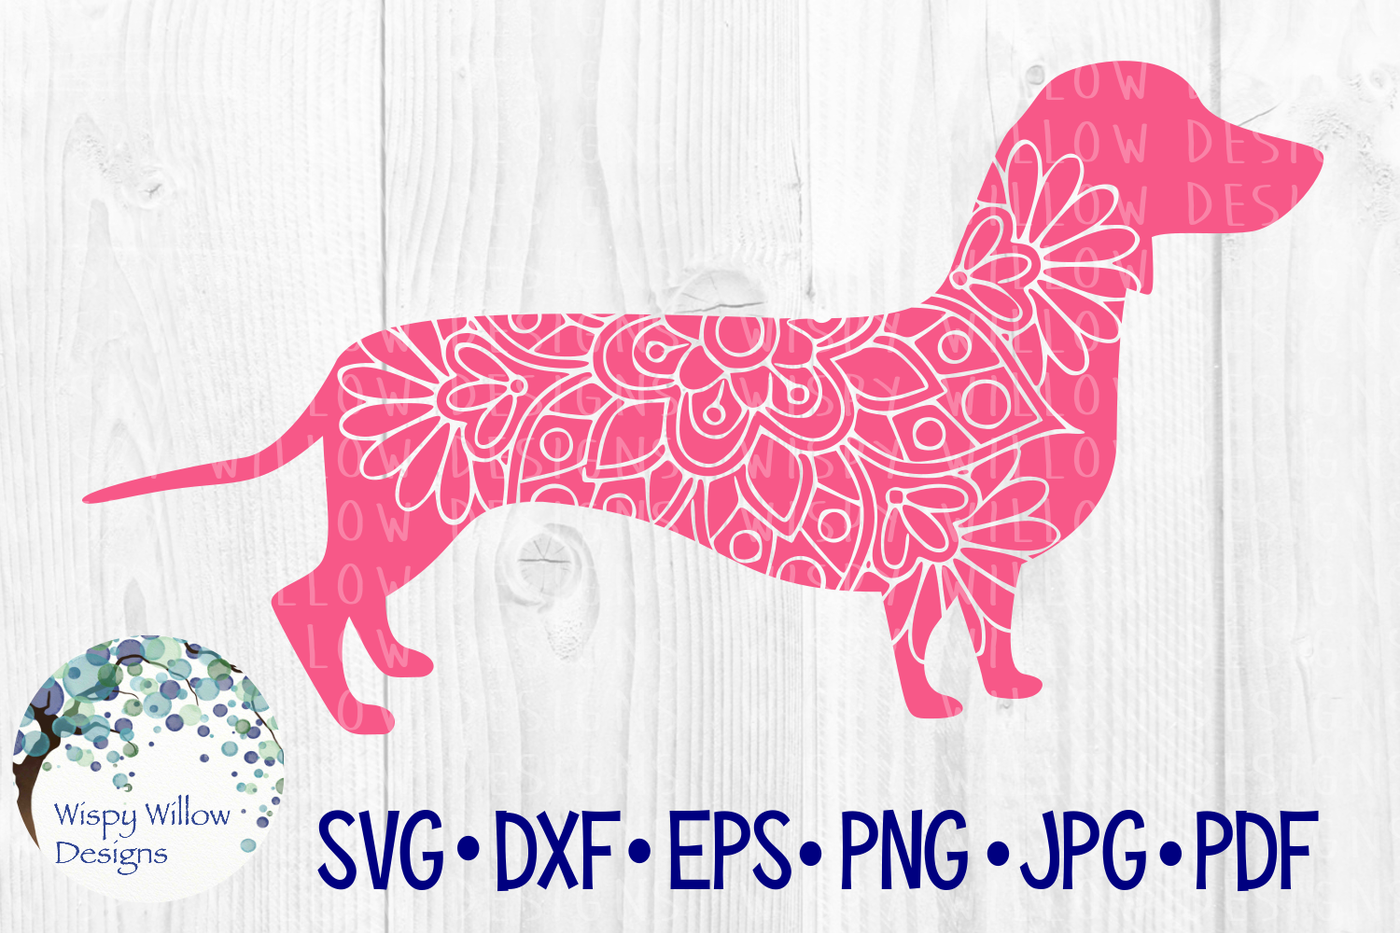 Download Dachshund Dog Mandala Weiner Dog Svg Dxf Eps Png Jpg Pdf By Wispy Willow Designs Thehungryjpeg Com